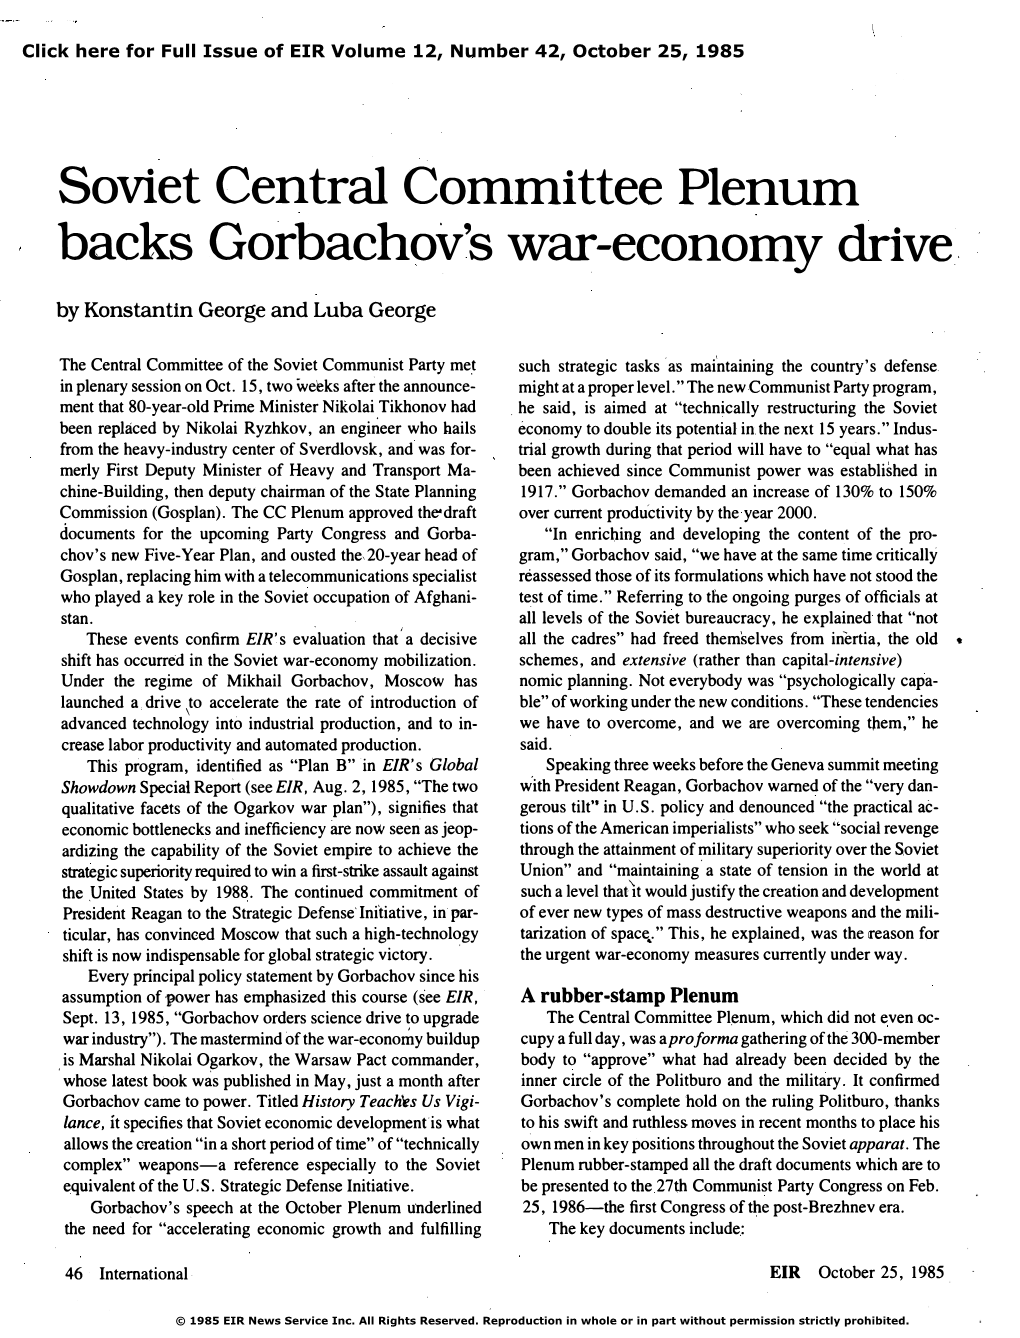 Soviet Central Committee Plenum Backs Gorbachov's War-Economy Drive